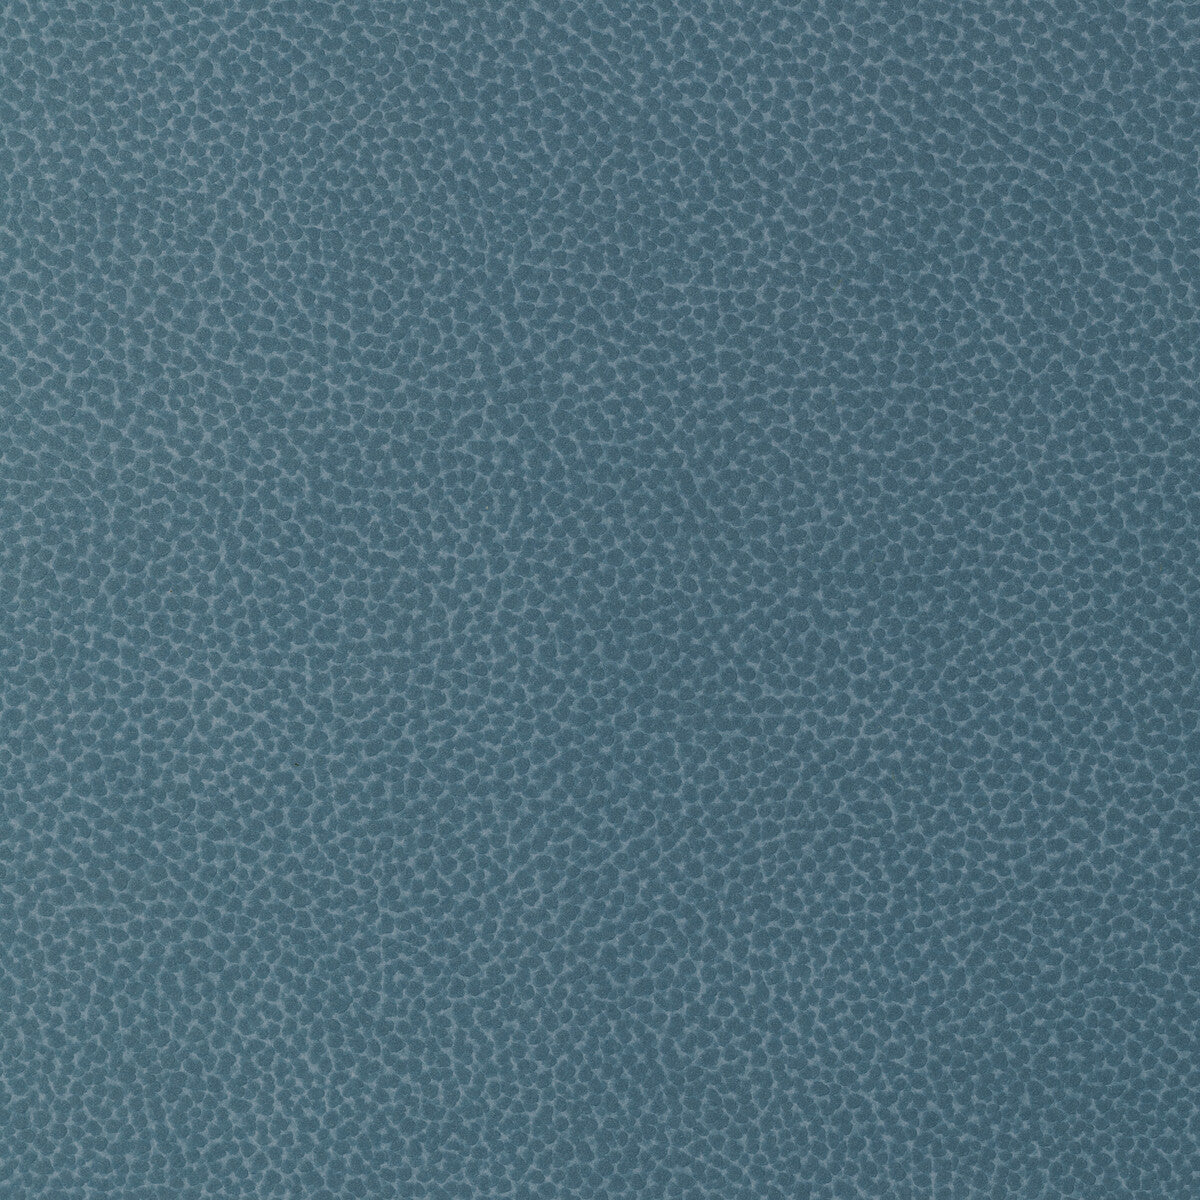 Kravet Design fabric in sweetgum-5 color - pattern SWEETGUM.5.0 - by Kravet Design